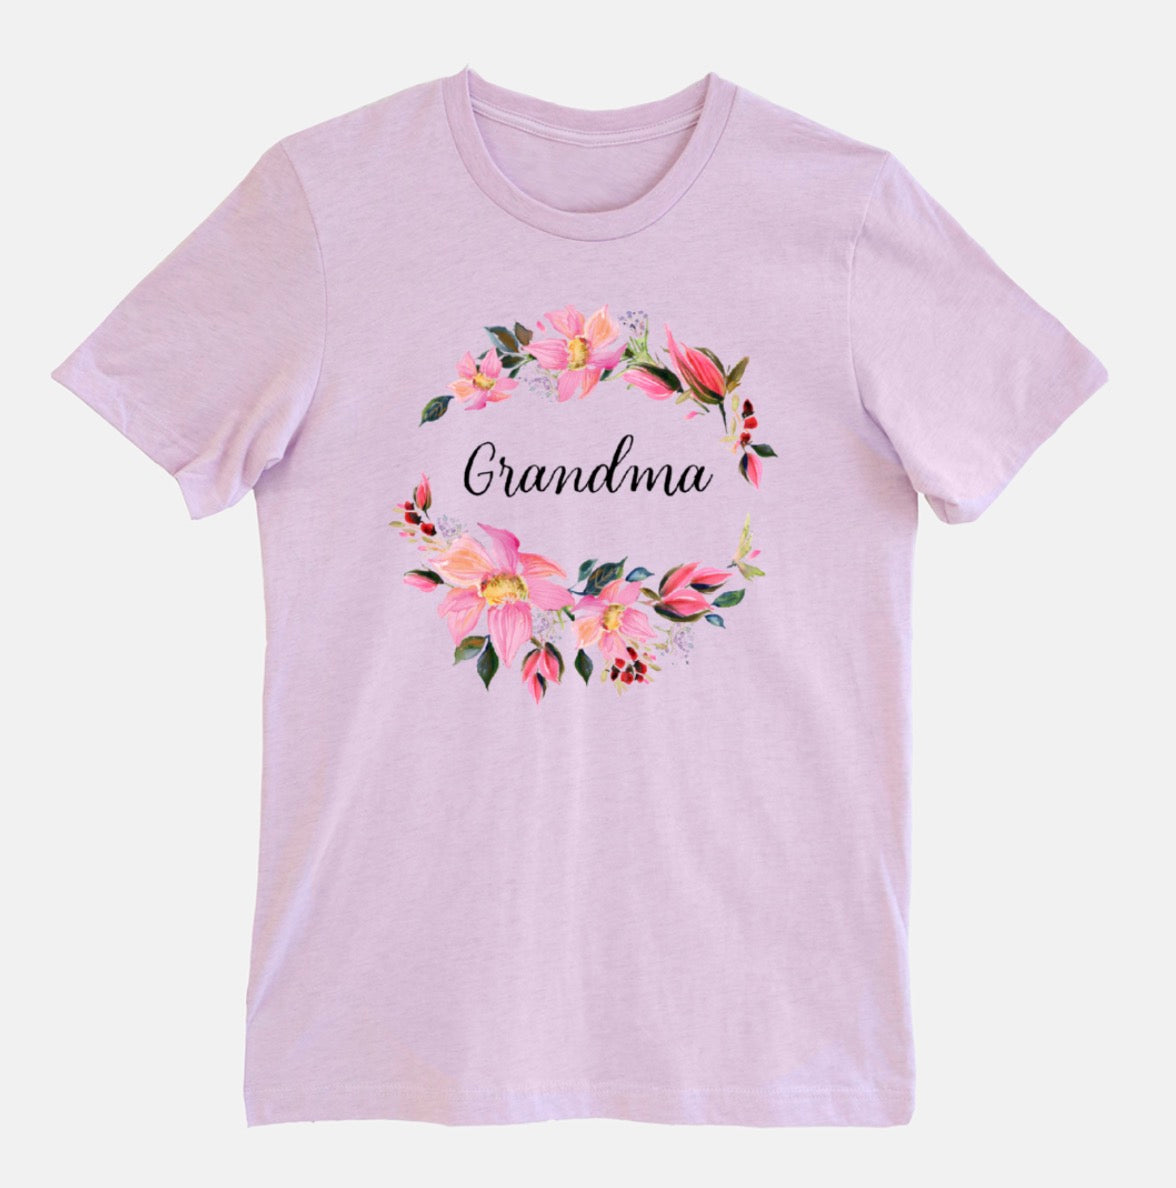 “Grandma” T-Shirt